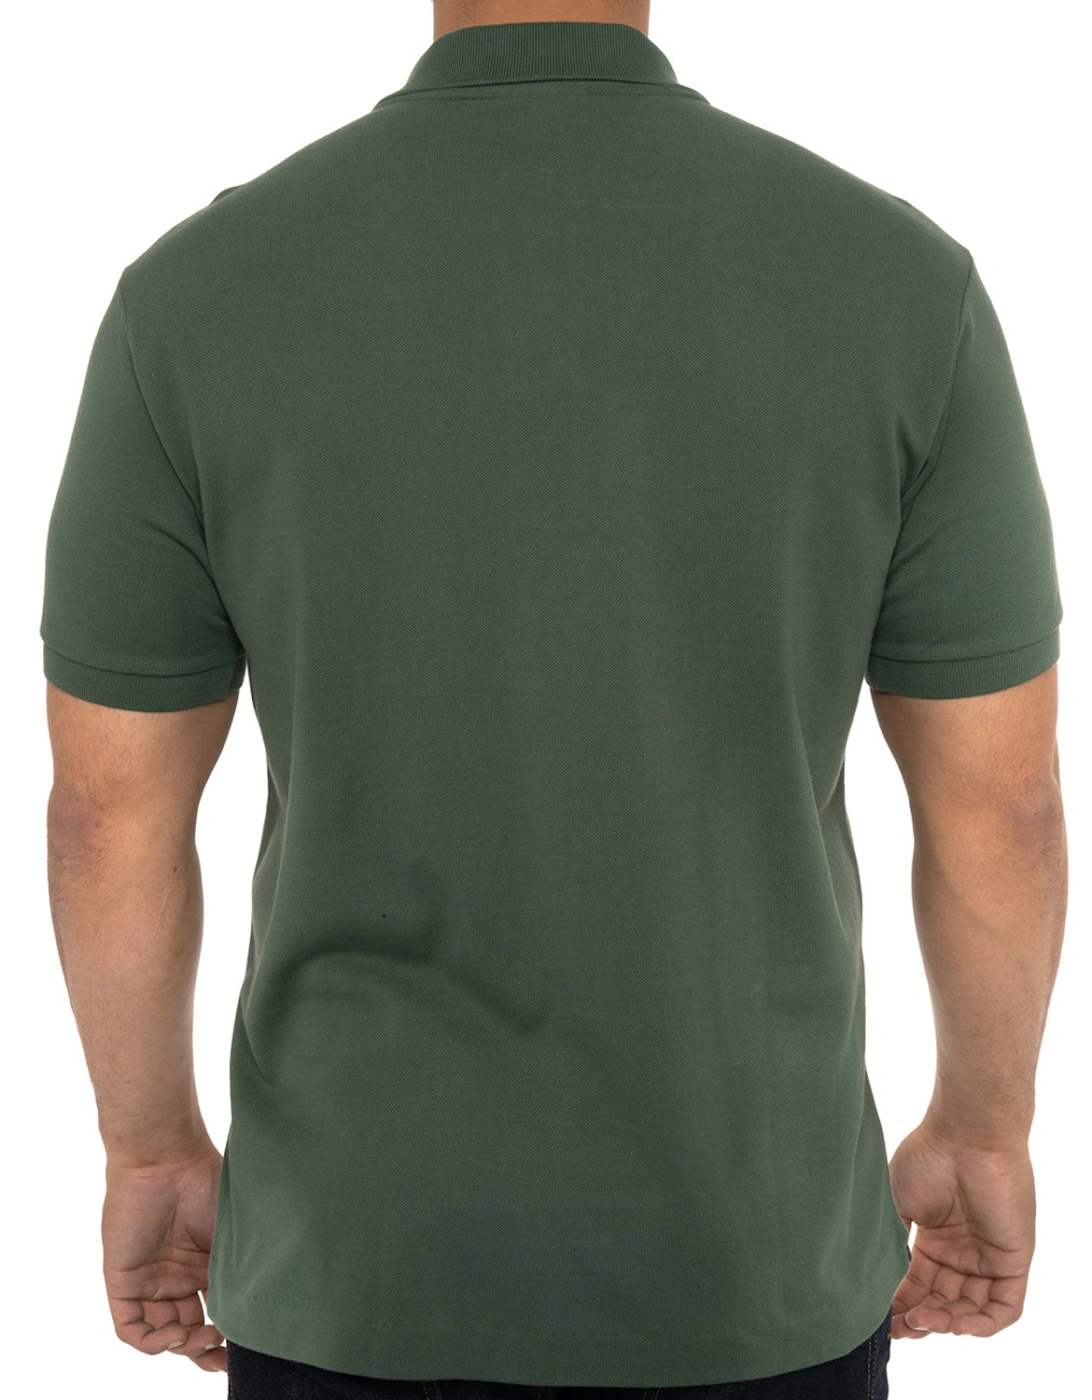 Mens S/S Plain Polo Shirt (Green)